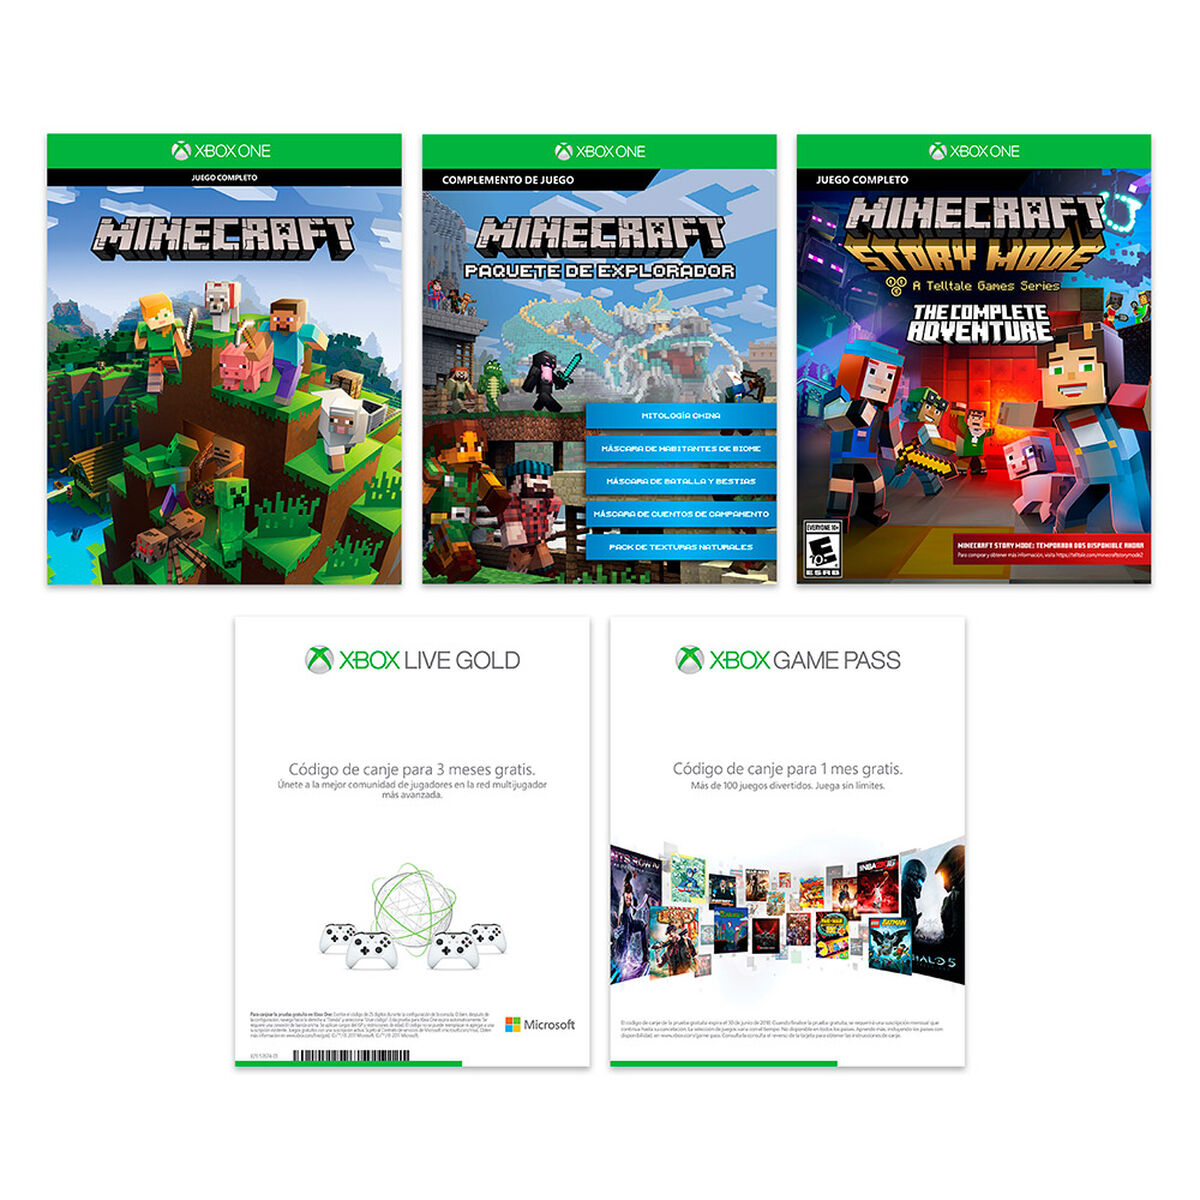 Consola XBOX ONE S Minecraft Complete Adventure 500 GB